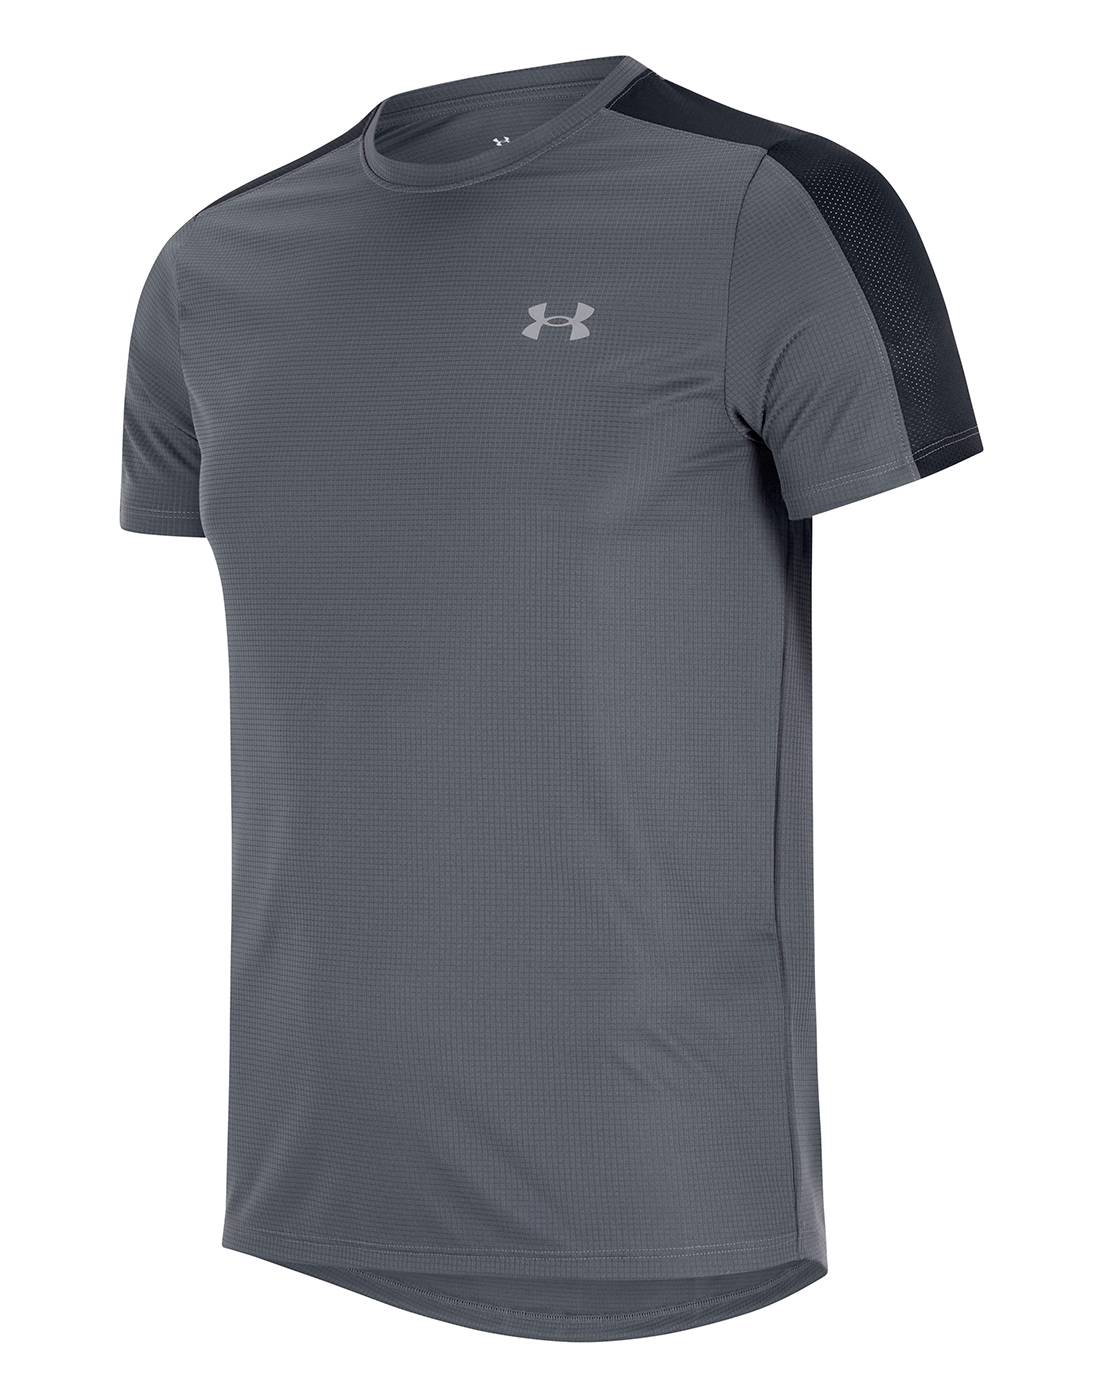 Under Armour Mens Speed Stride Run T-Shirt - Grey | Life Style Sports EU